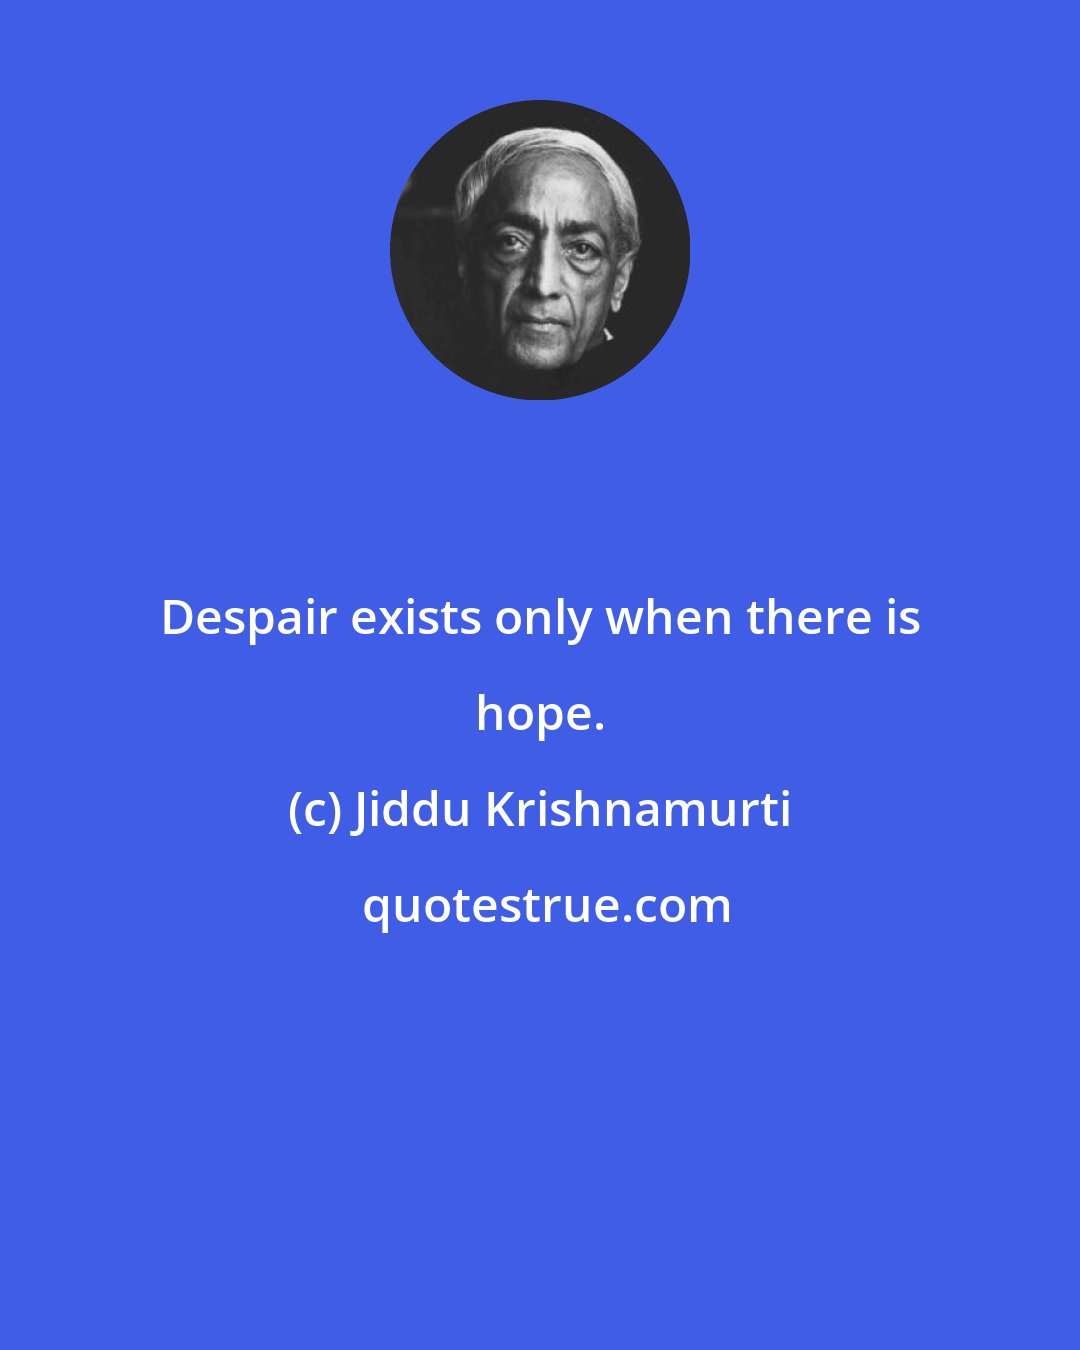 Jiddu Krishnamurti: Despair exists only when there is hope.